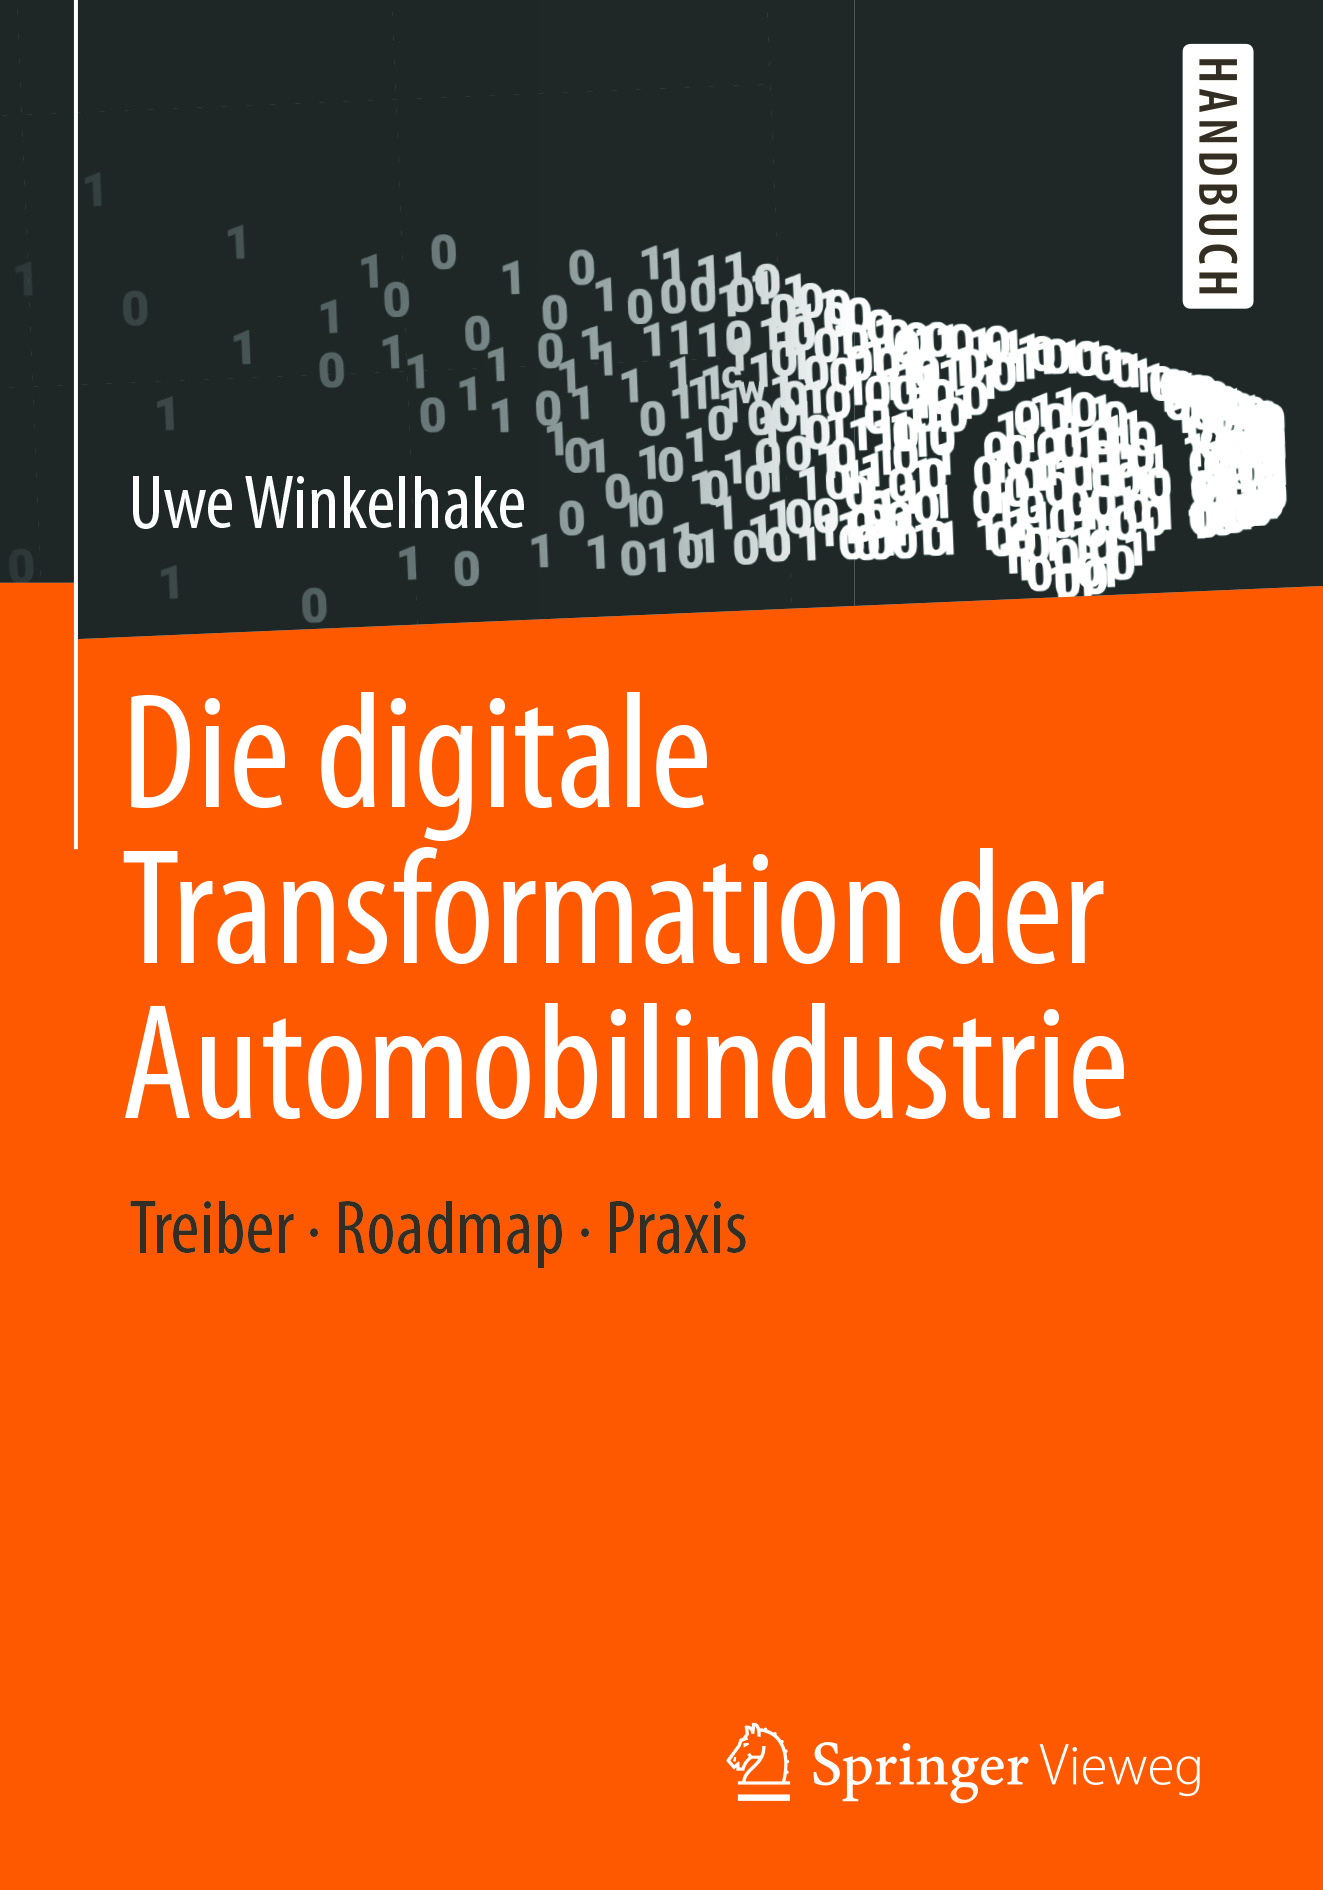 Winkelhake, Uwe - Die digitale Transformation der Automobilindustrie, ebook